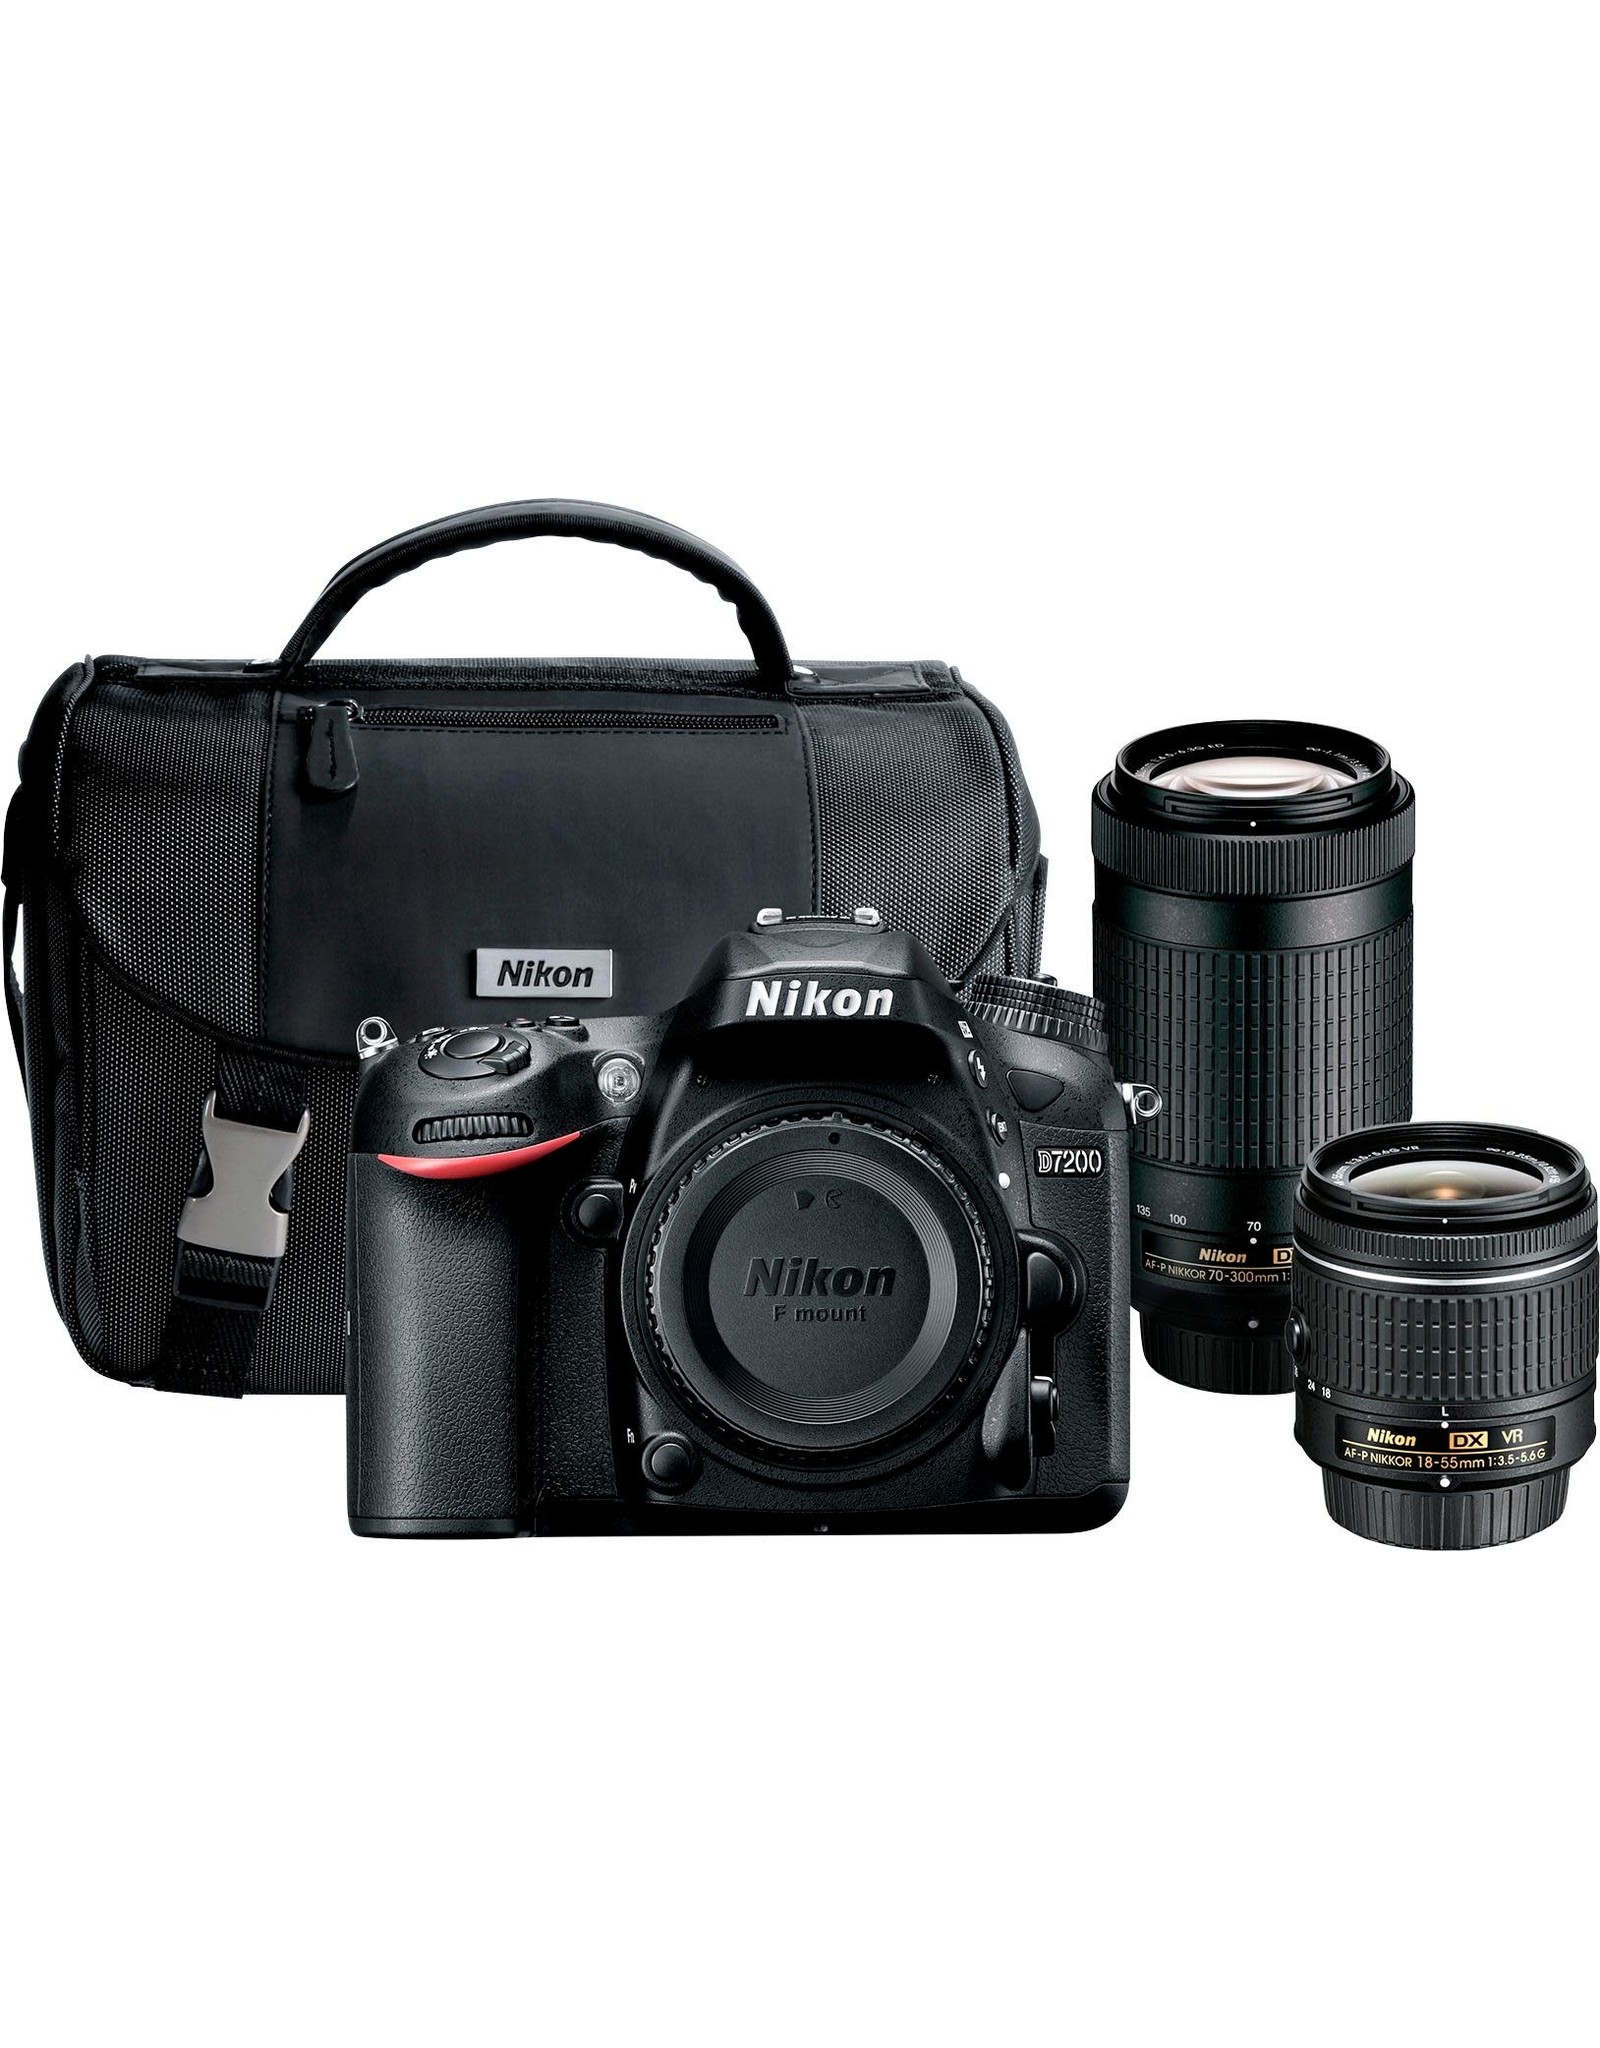 Nikon Nikon D7200 DSLR with 18-55mm and 70-300mm Lenses